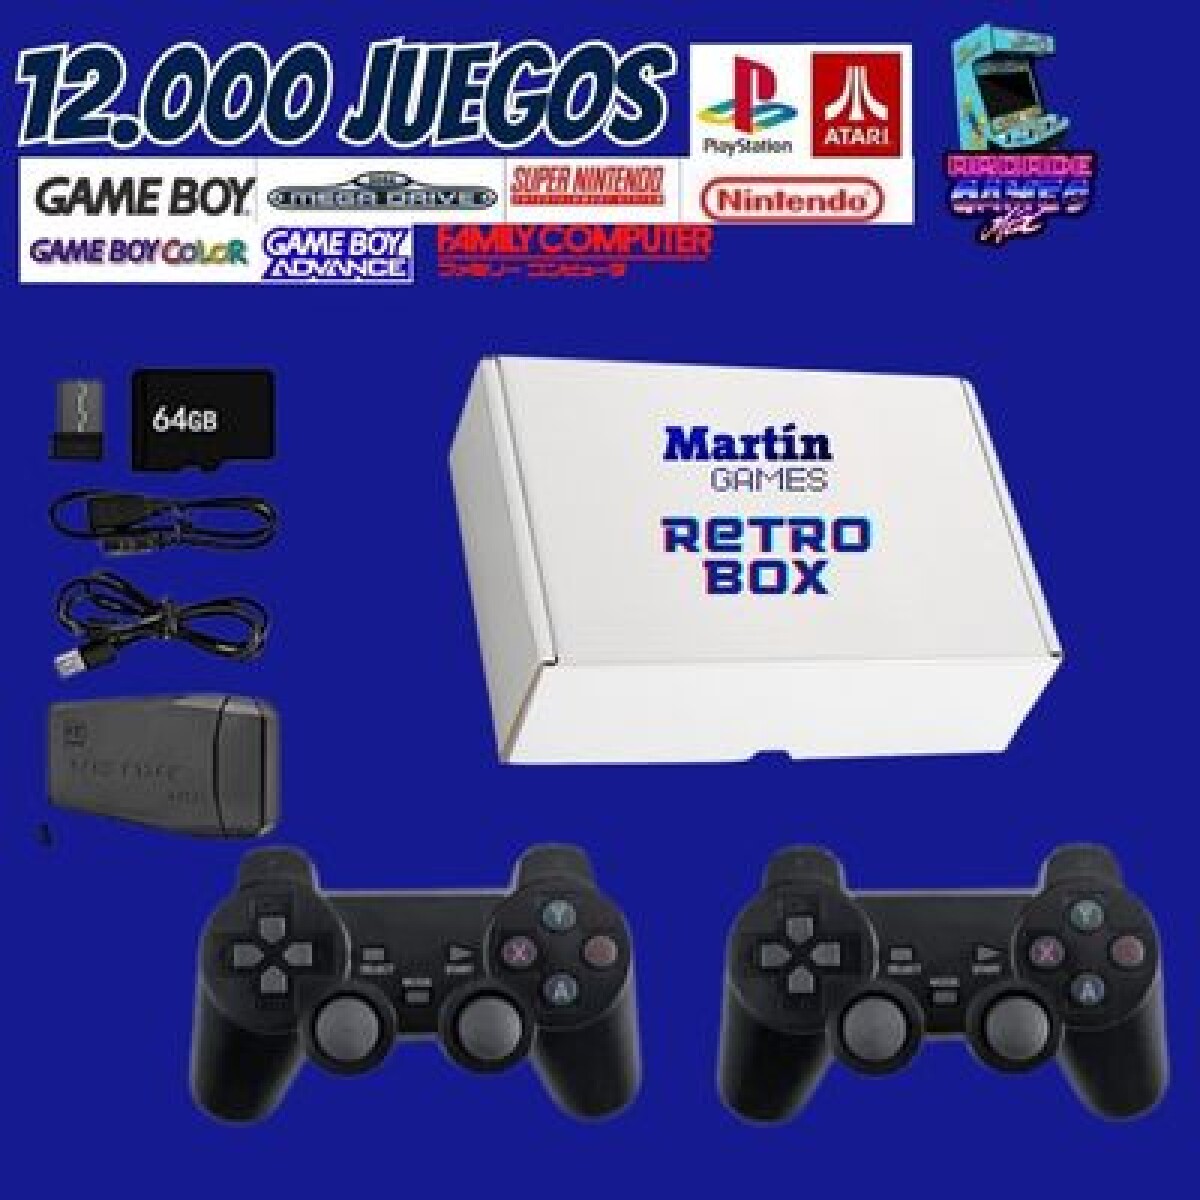 Martin Games Retro Box 12000 juegos 